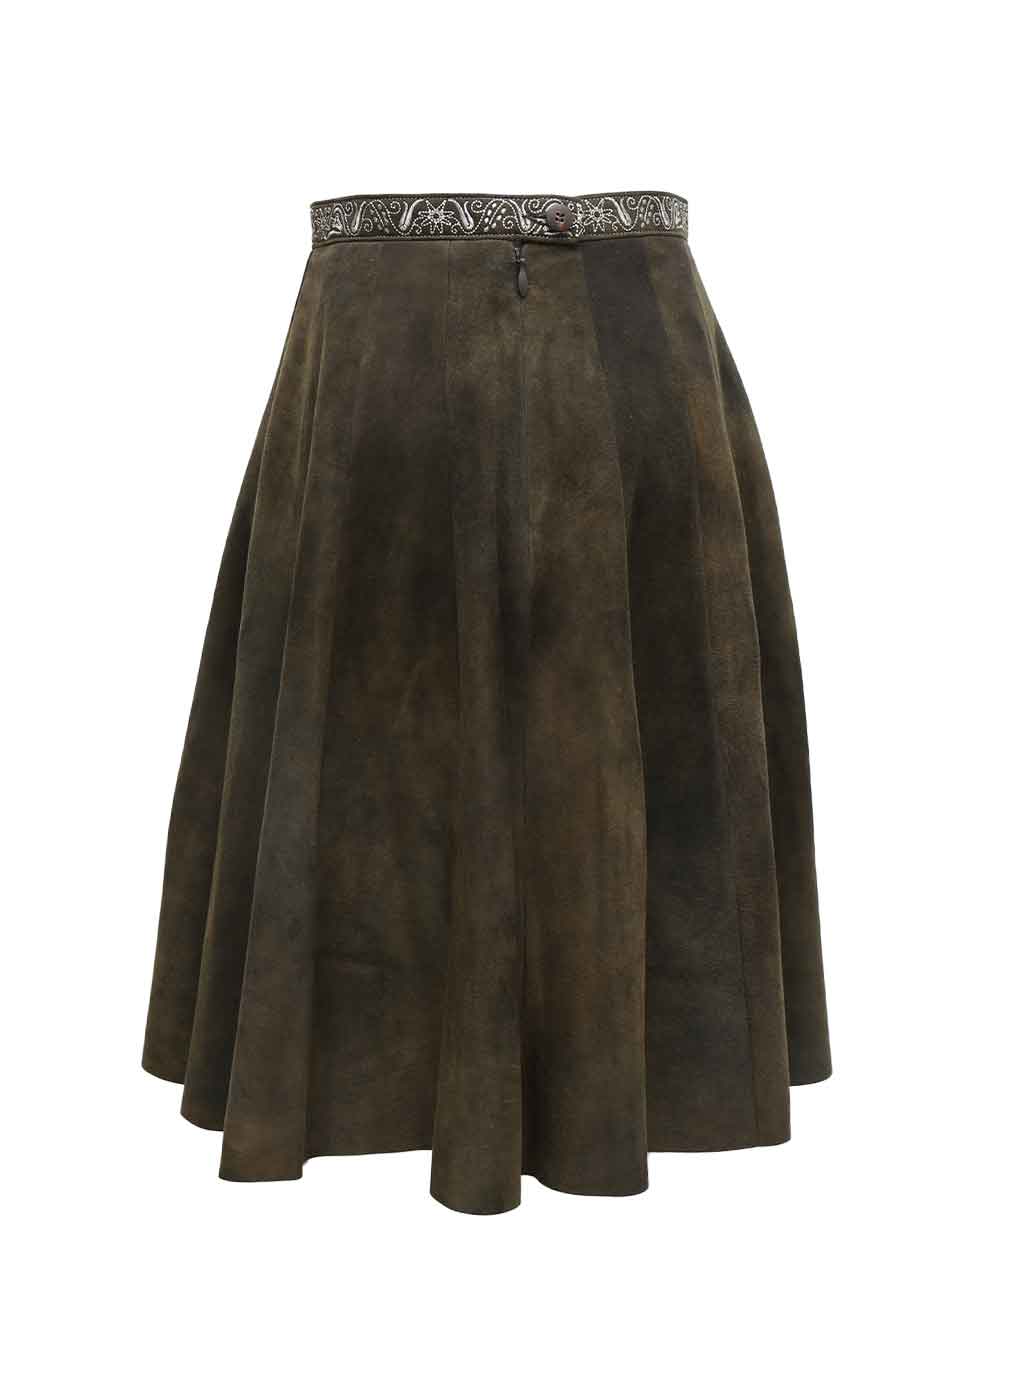 Goat Leather Skirt “Gloria”, kabok